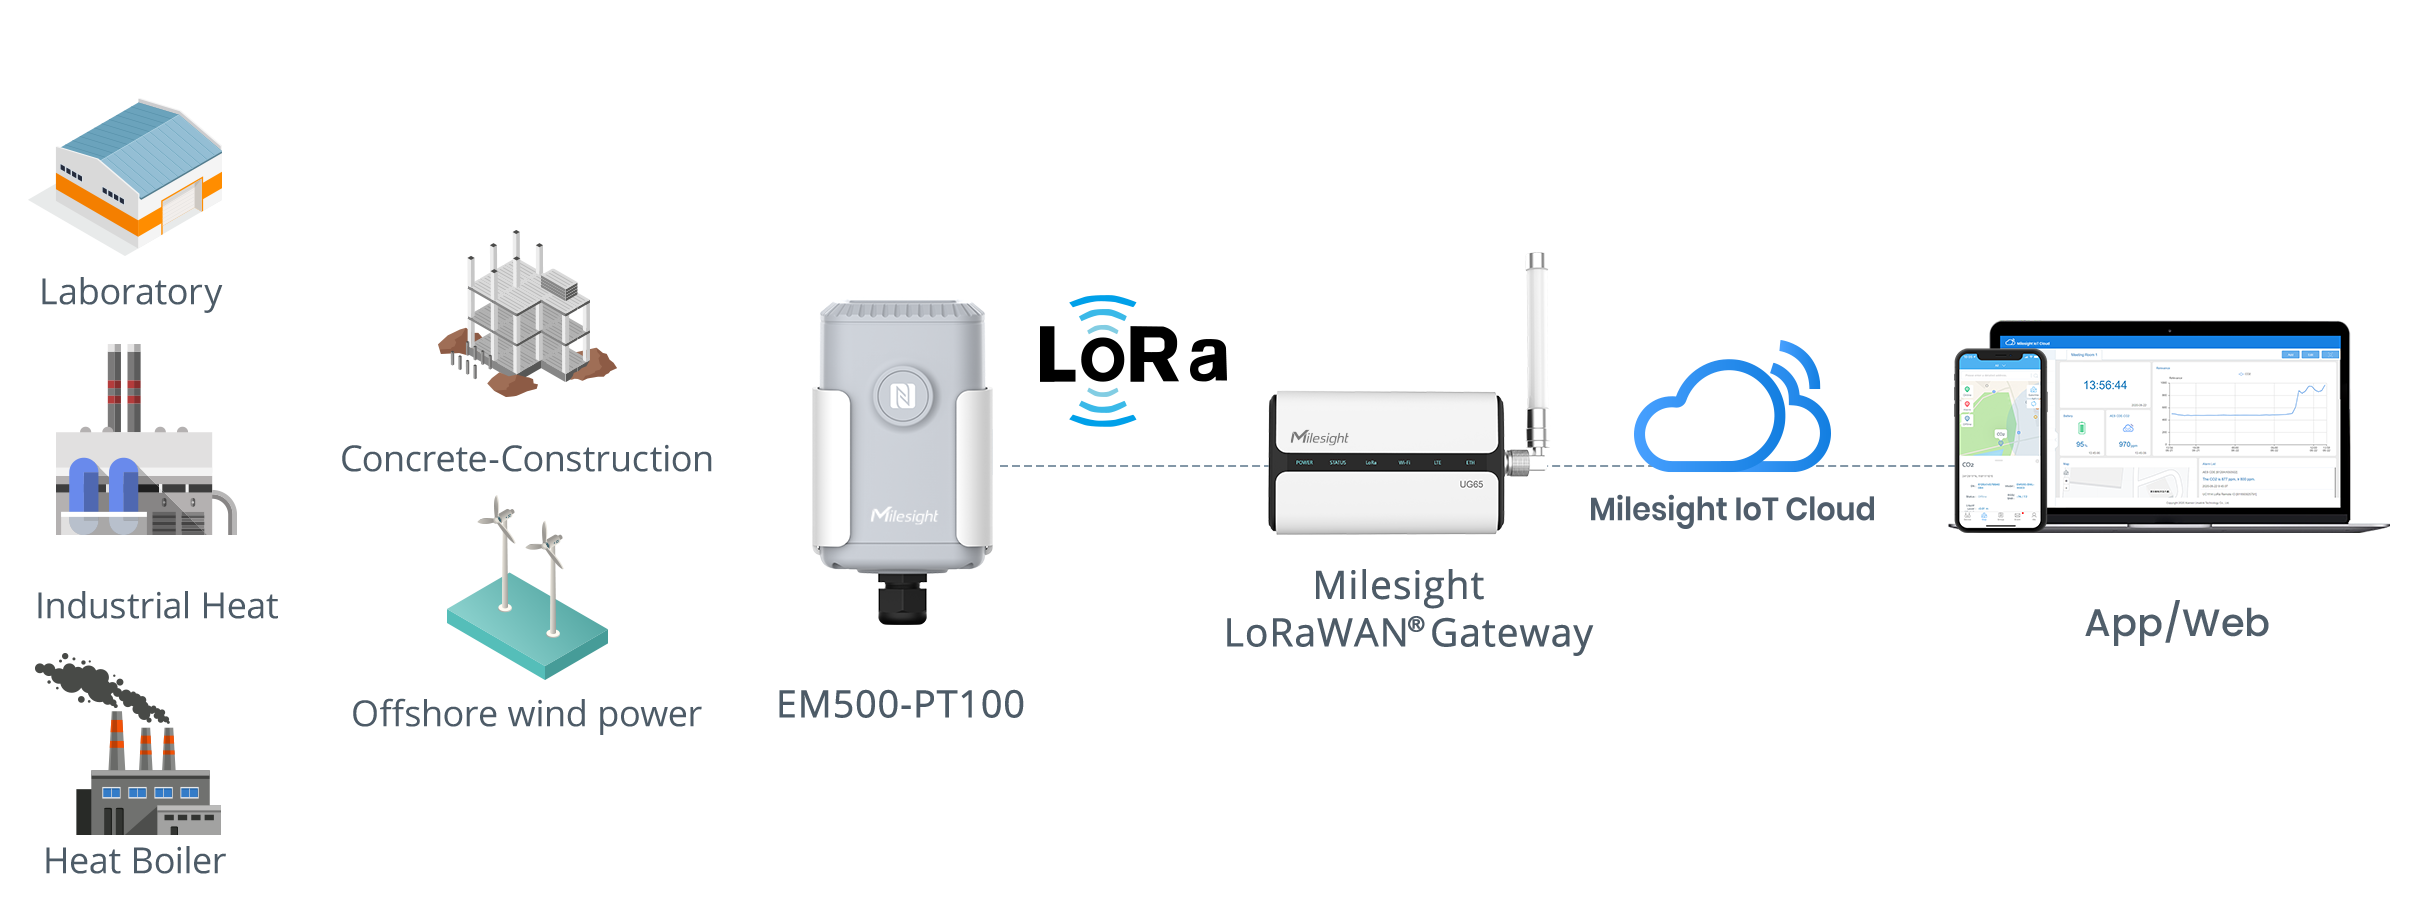 Milesight EM500-PT100 Applications